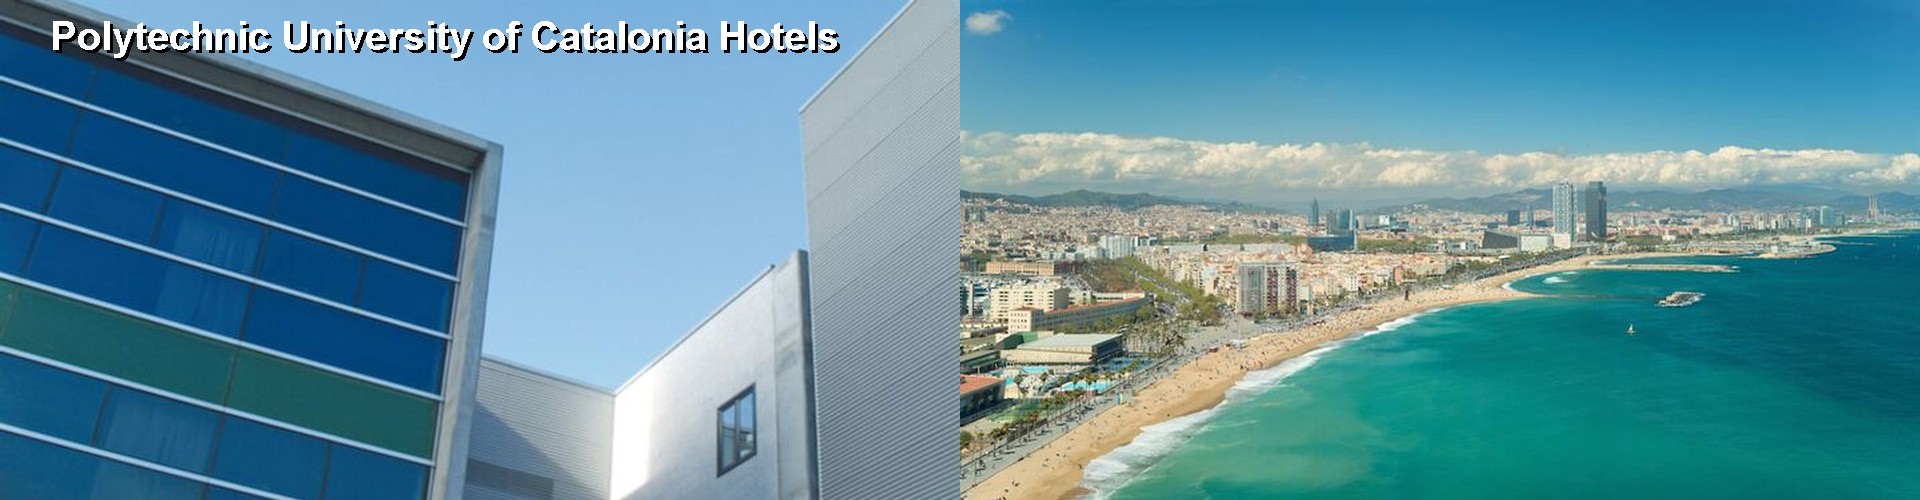 5 Best Hotels near Polytechnic University of Catalonia